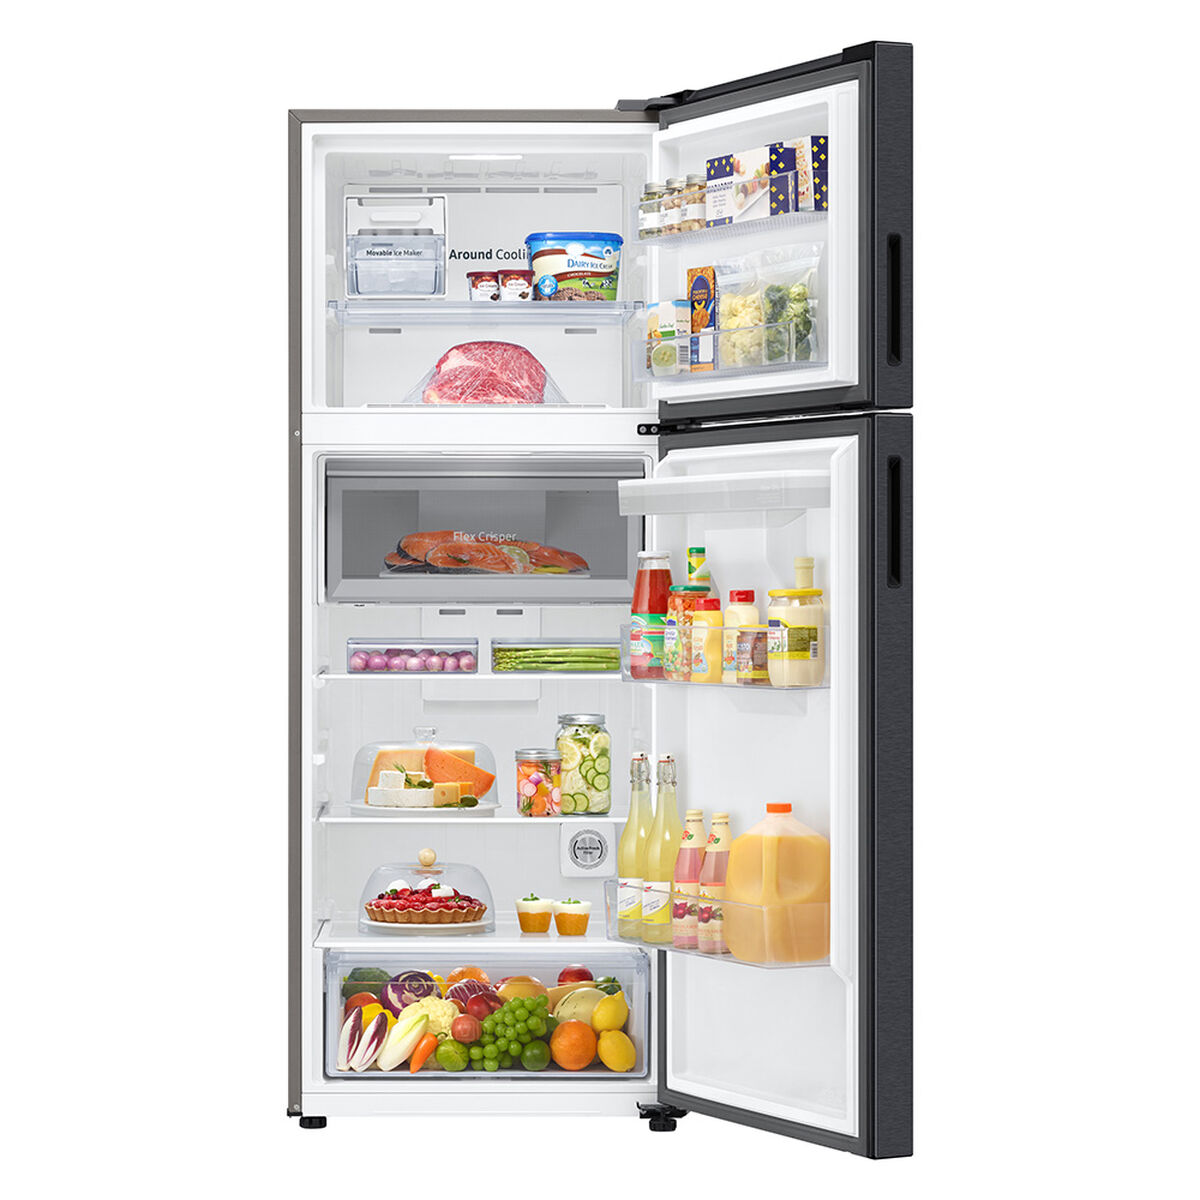 Refrigerador No Frost Samsung RT48A6640B1/ZS 457 lts